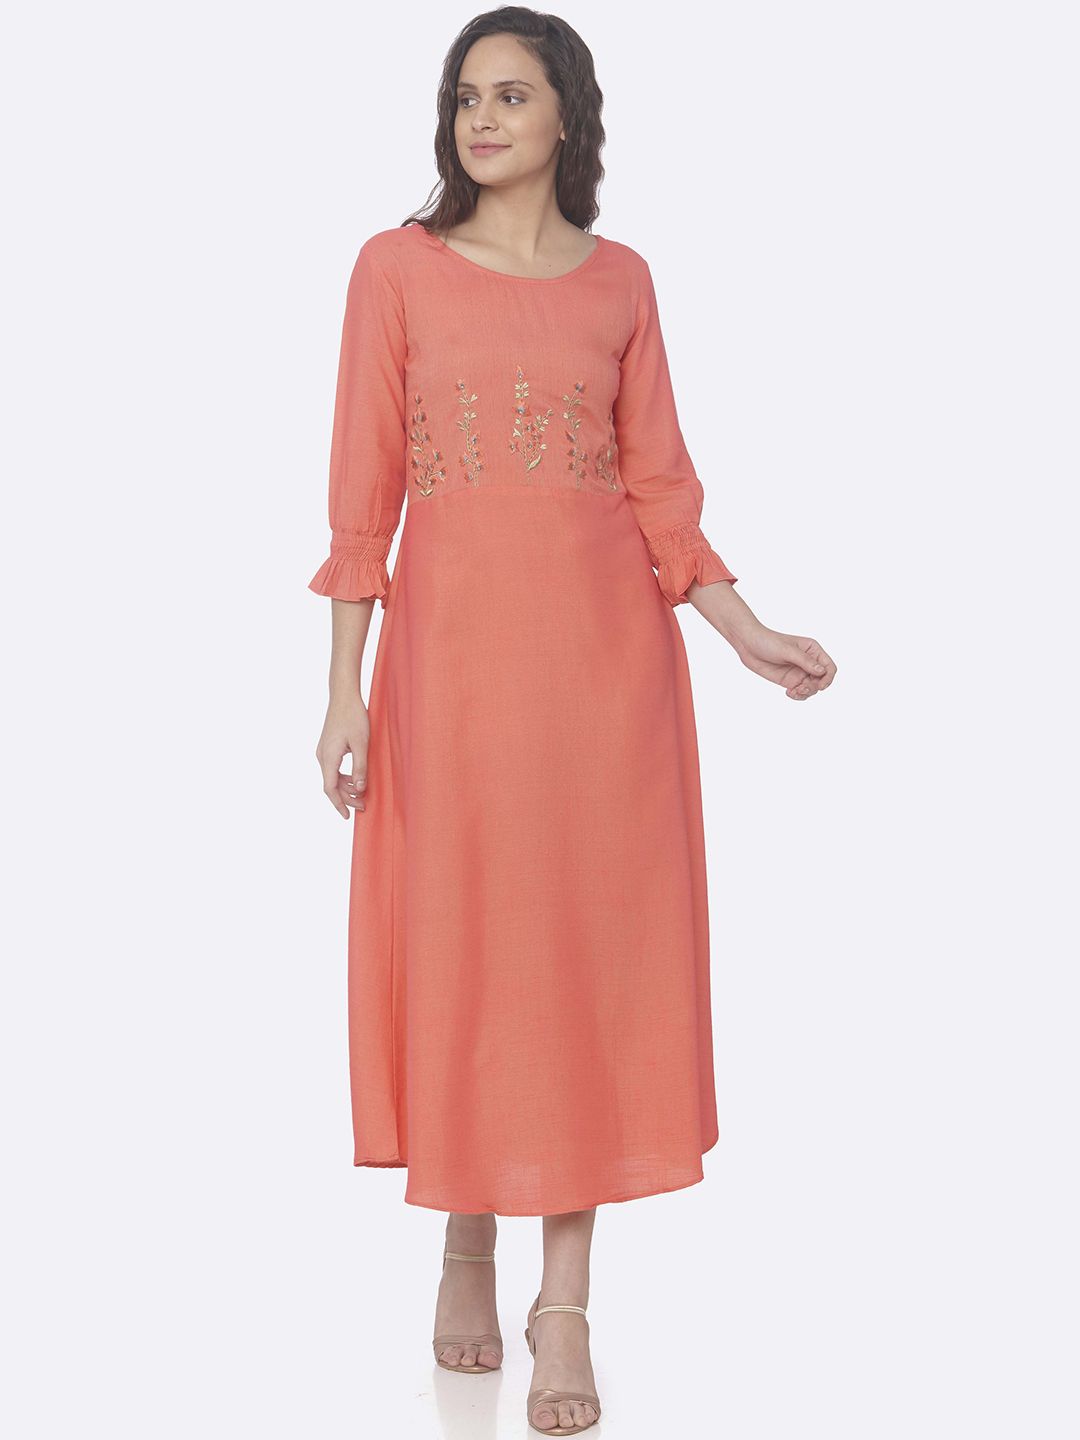 RAISIN Women Peach-Coloured Embroidered A-Line Ethnic Dress Price in India